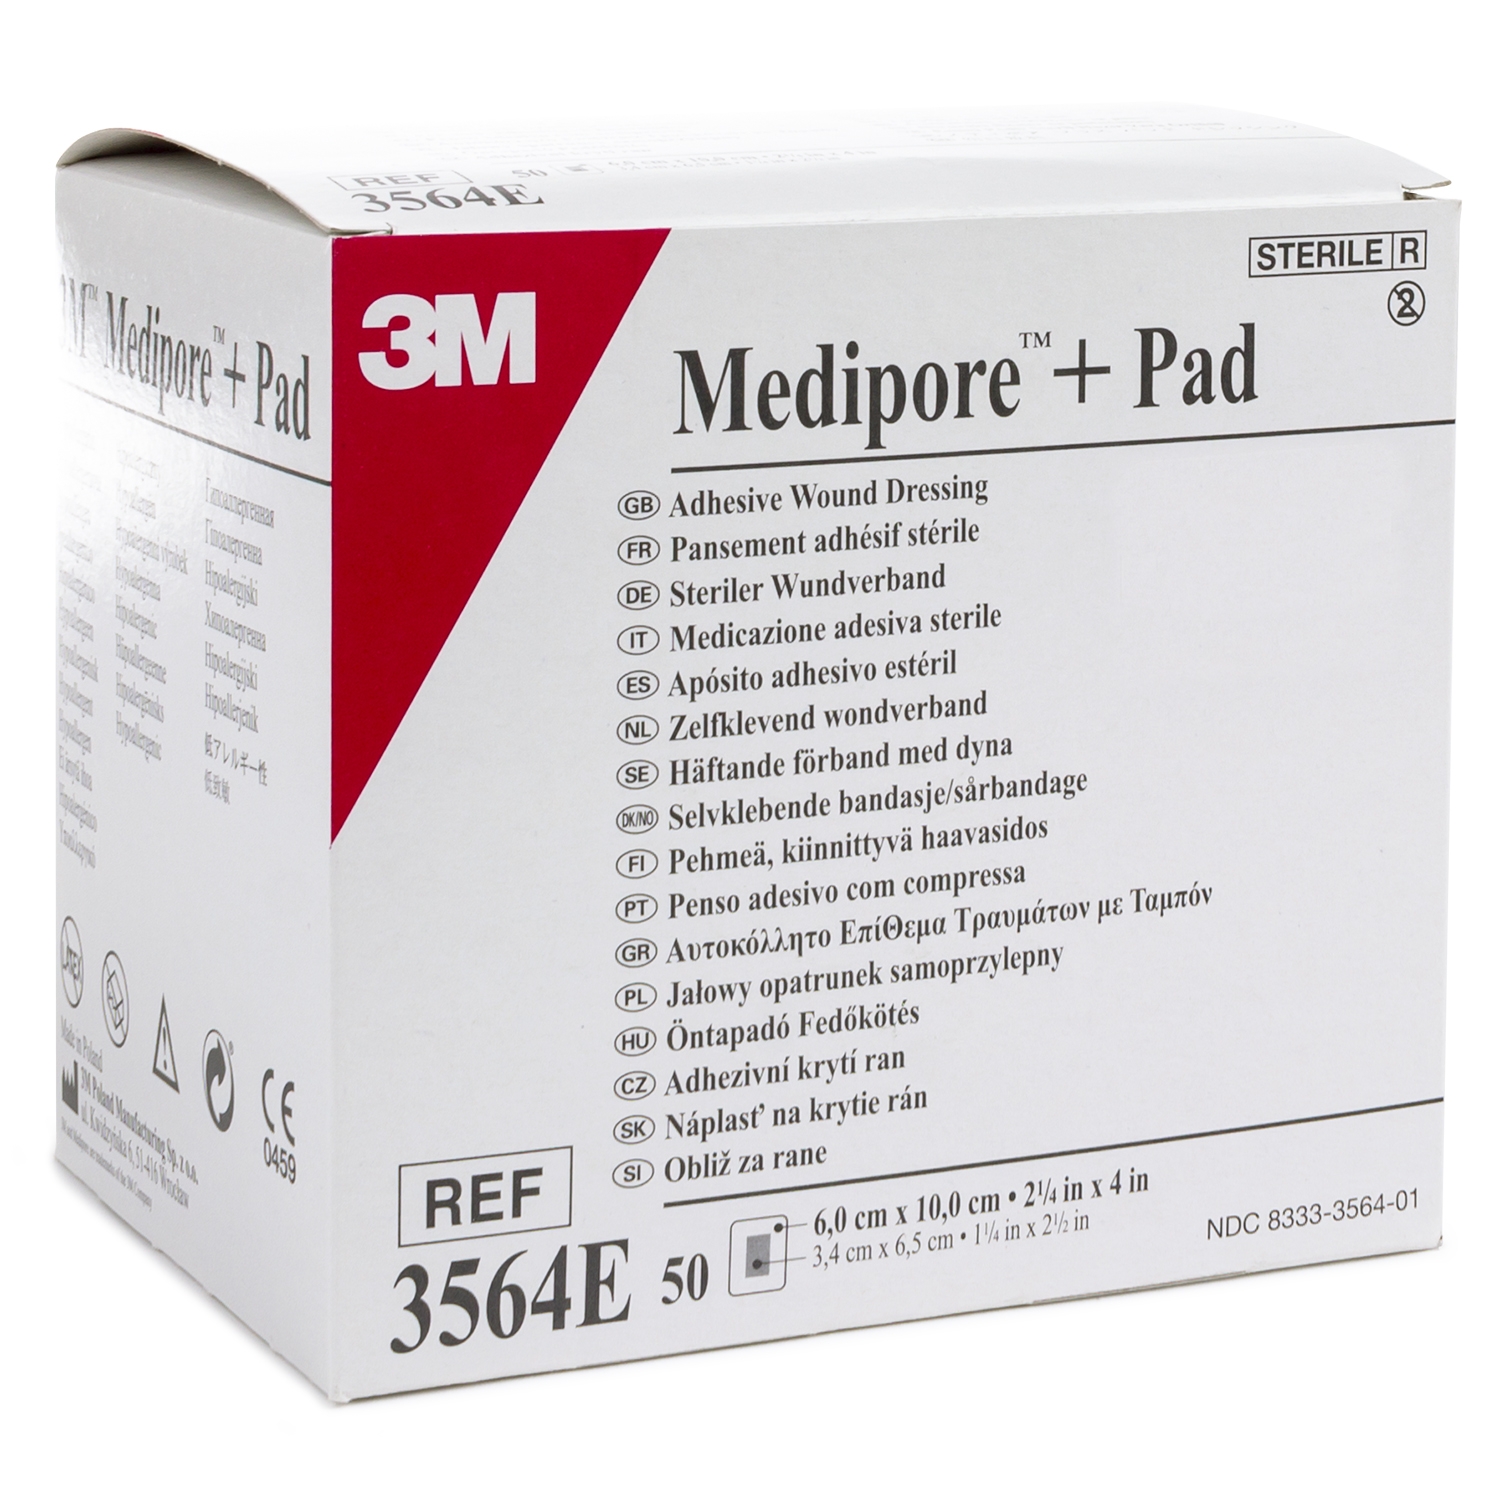 Medipore + pad - 6 x 10 cm (50 pcs)